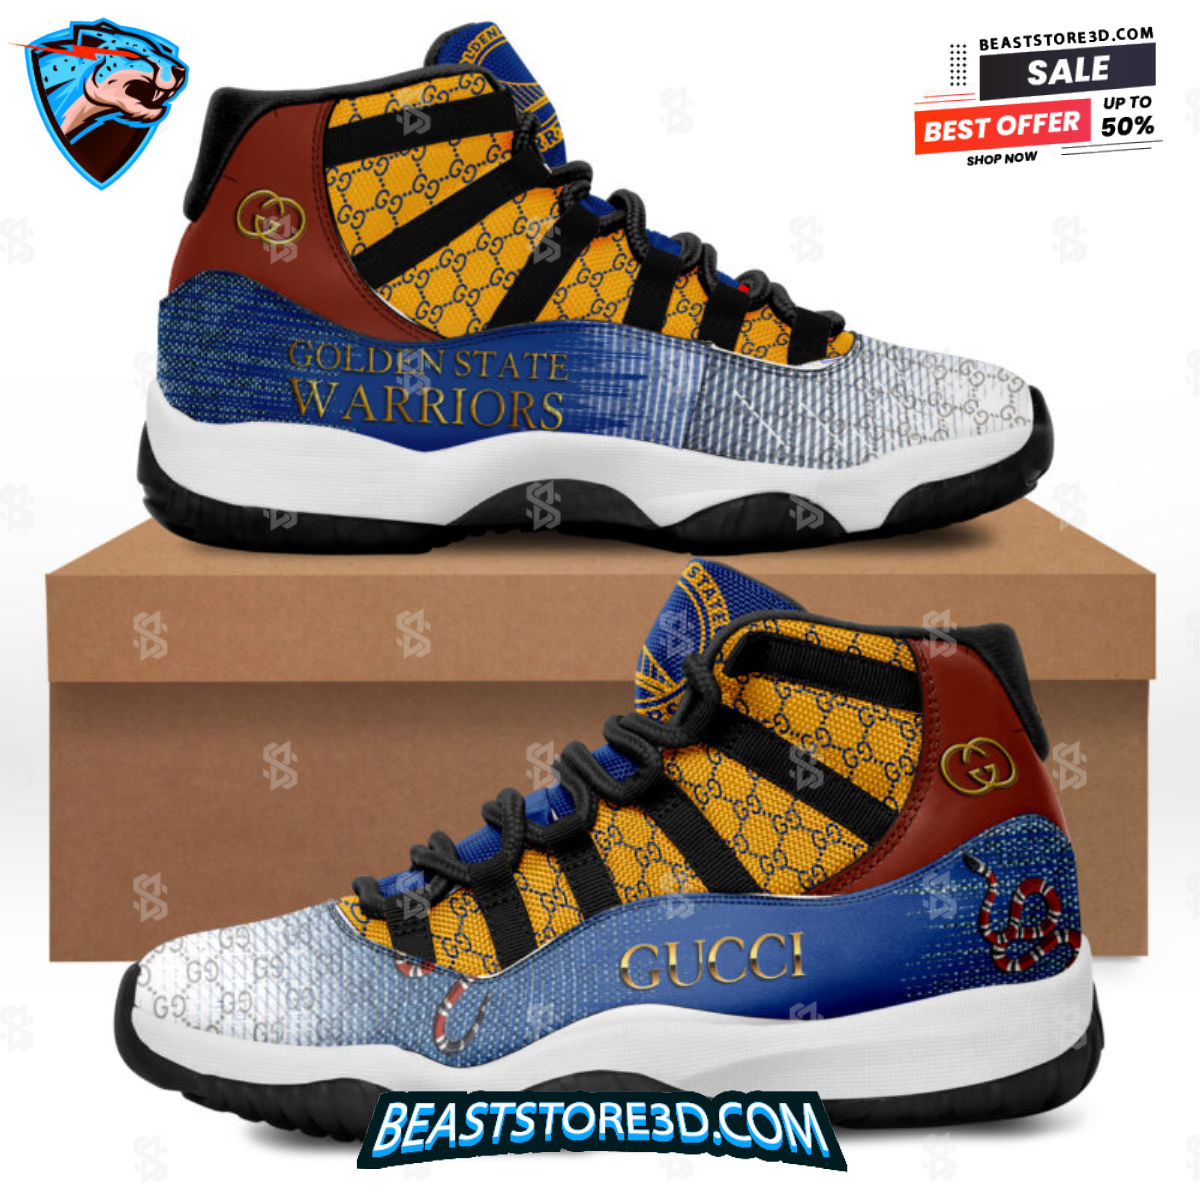 Golden State Warriors x Gucci Snake Air Jordan Retro 11 Sneakers